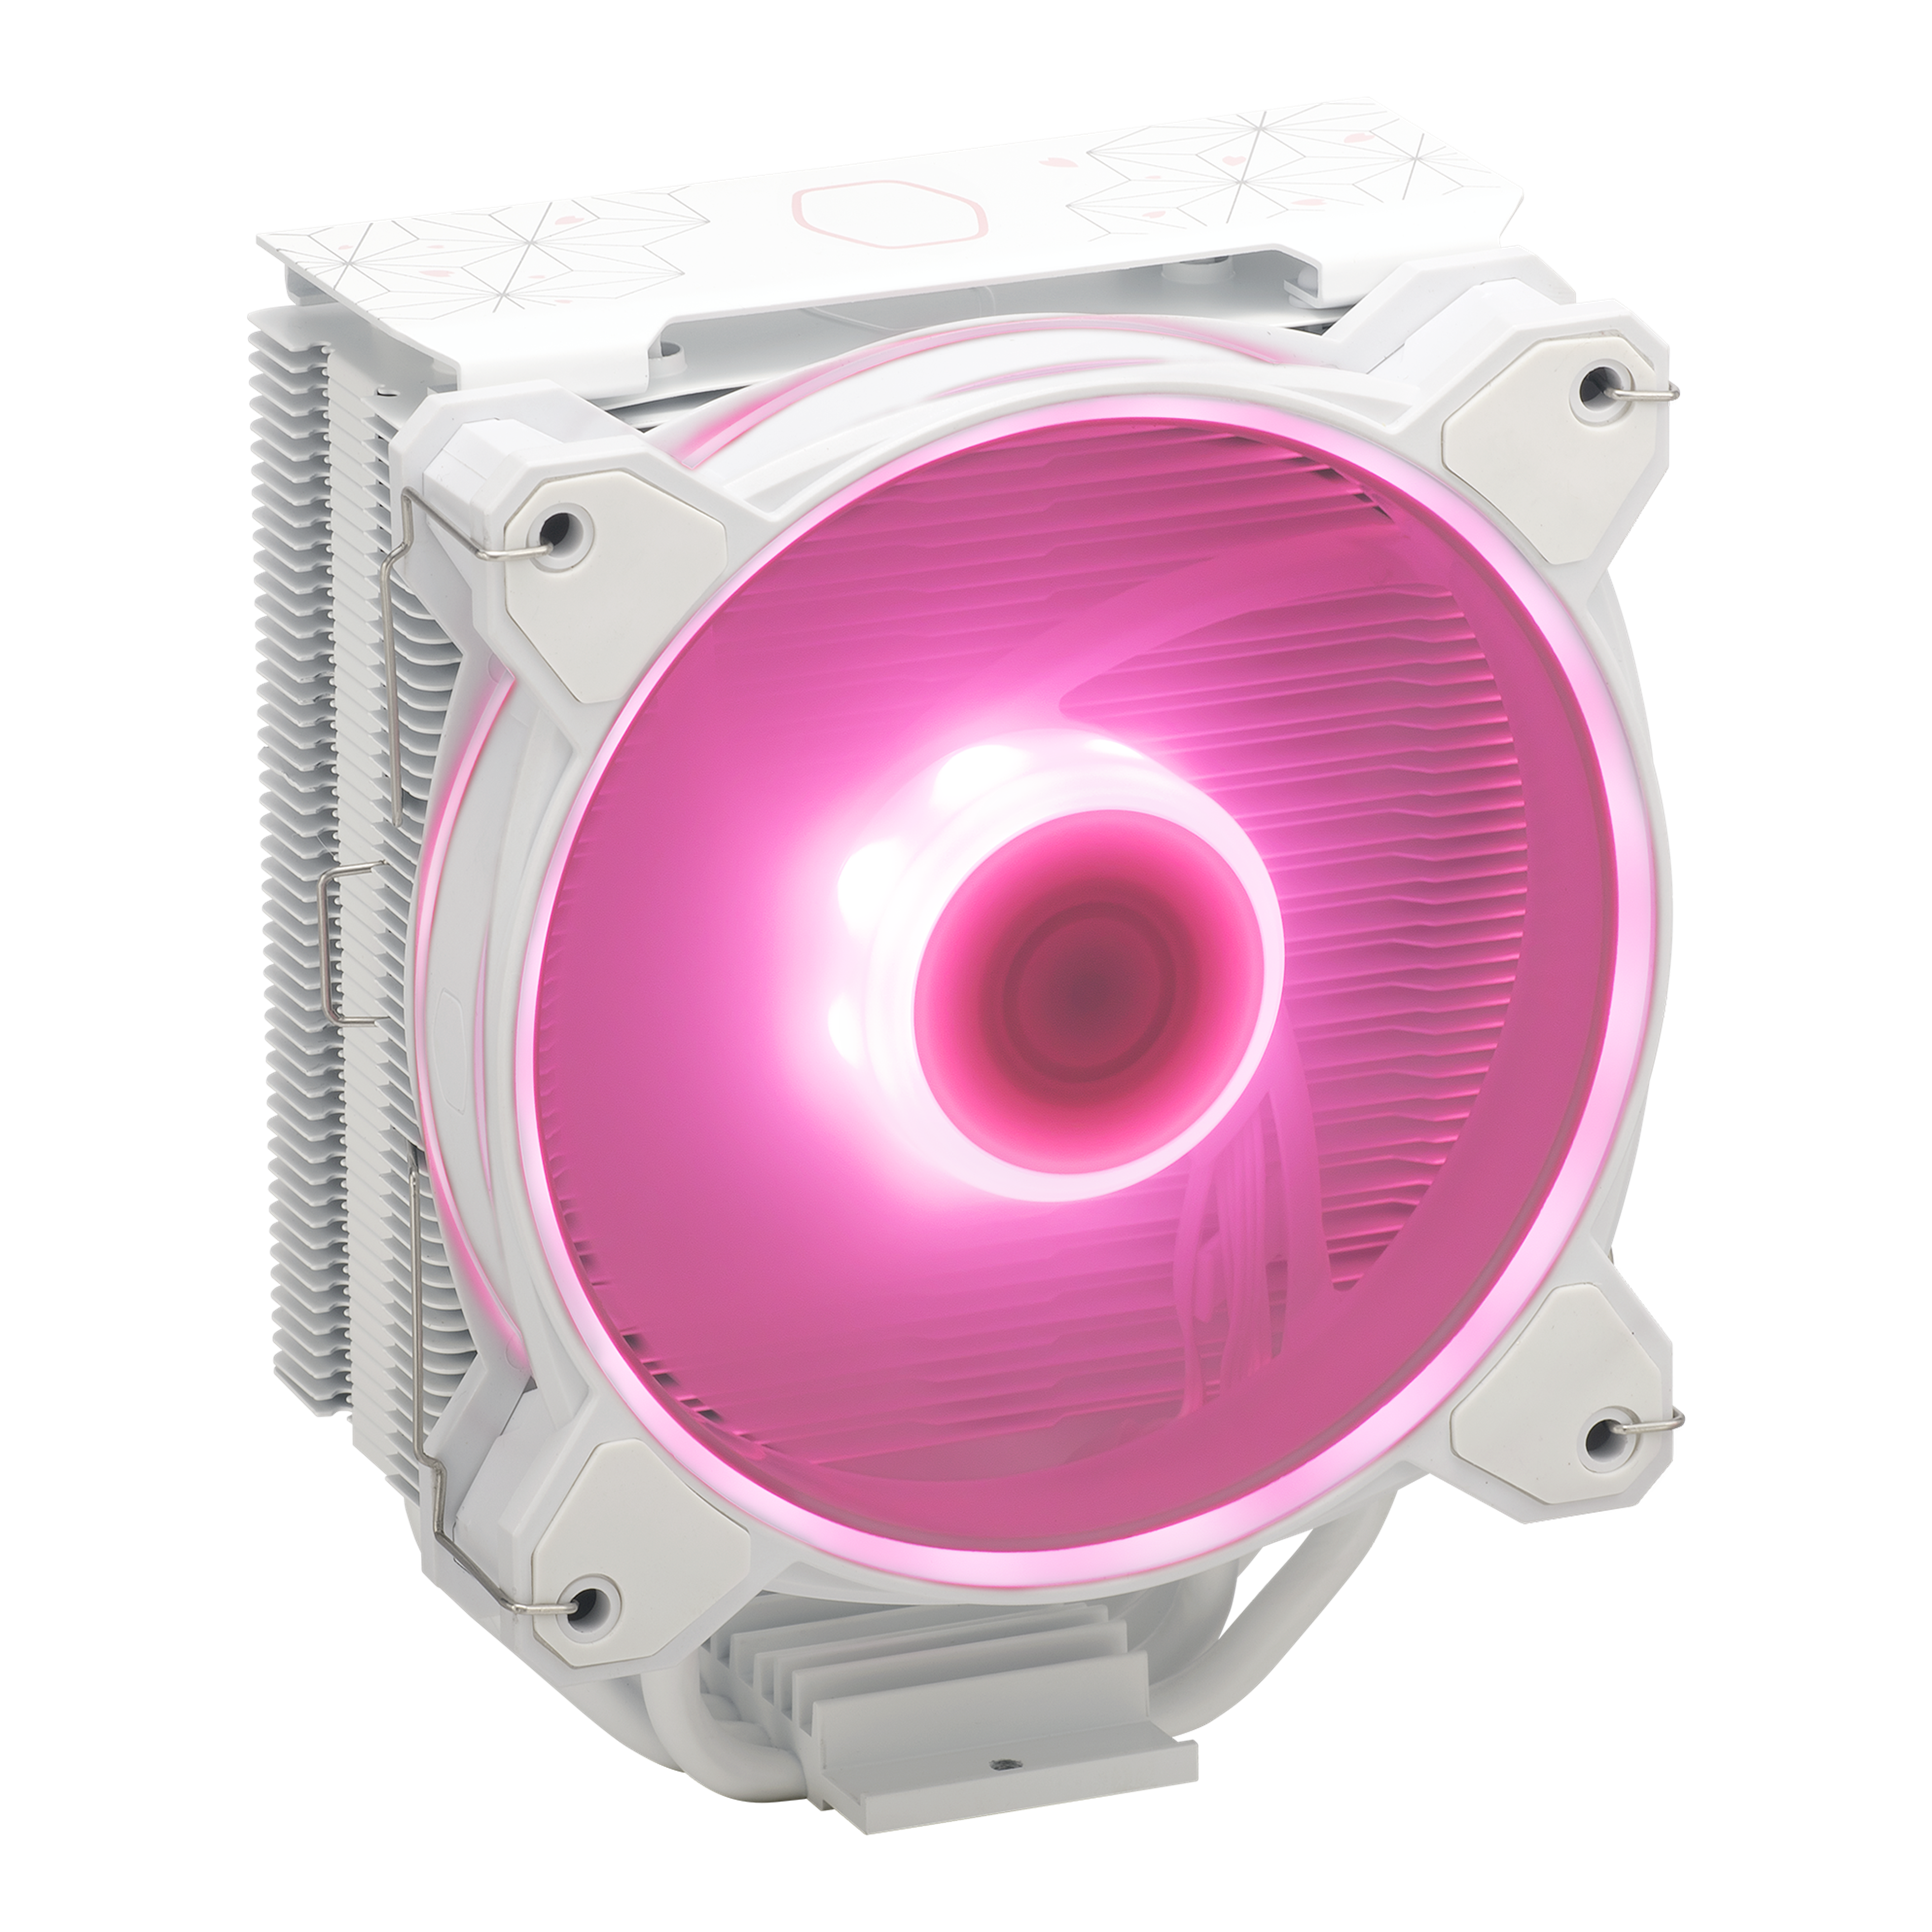 Hyper 212 Halo White Sakura Limited Edition | Cooler Master 日本